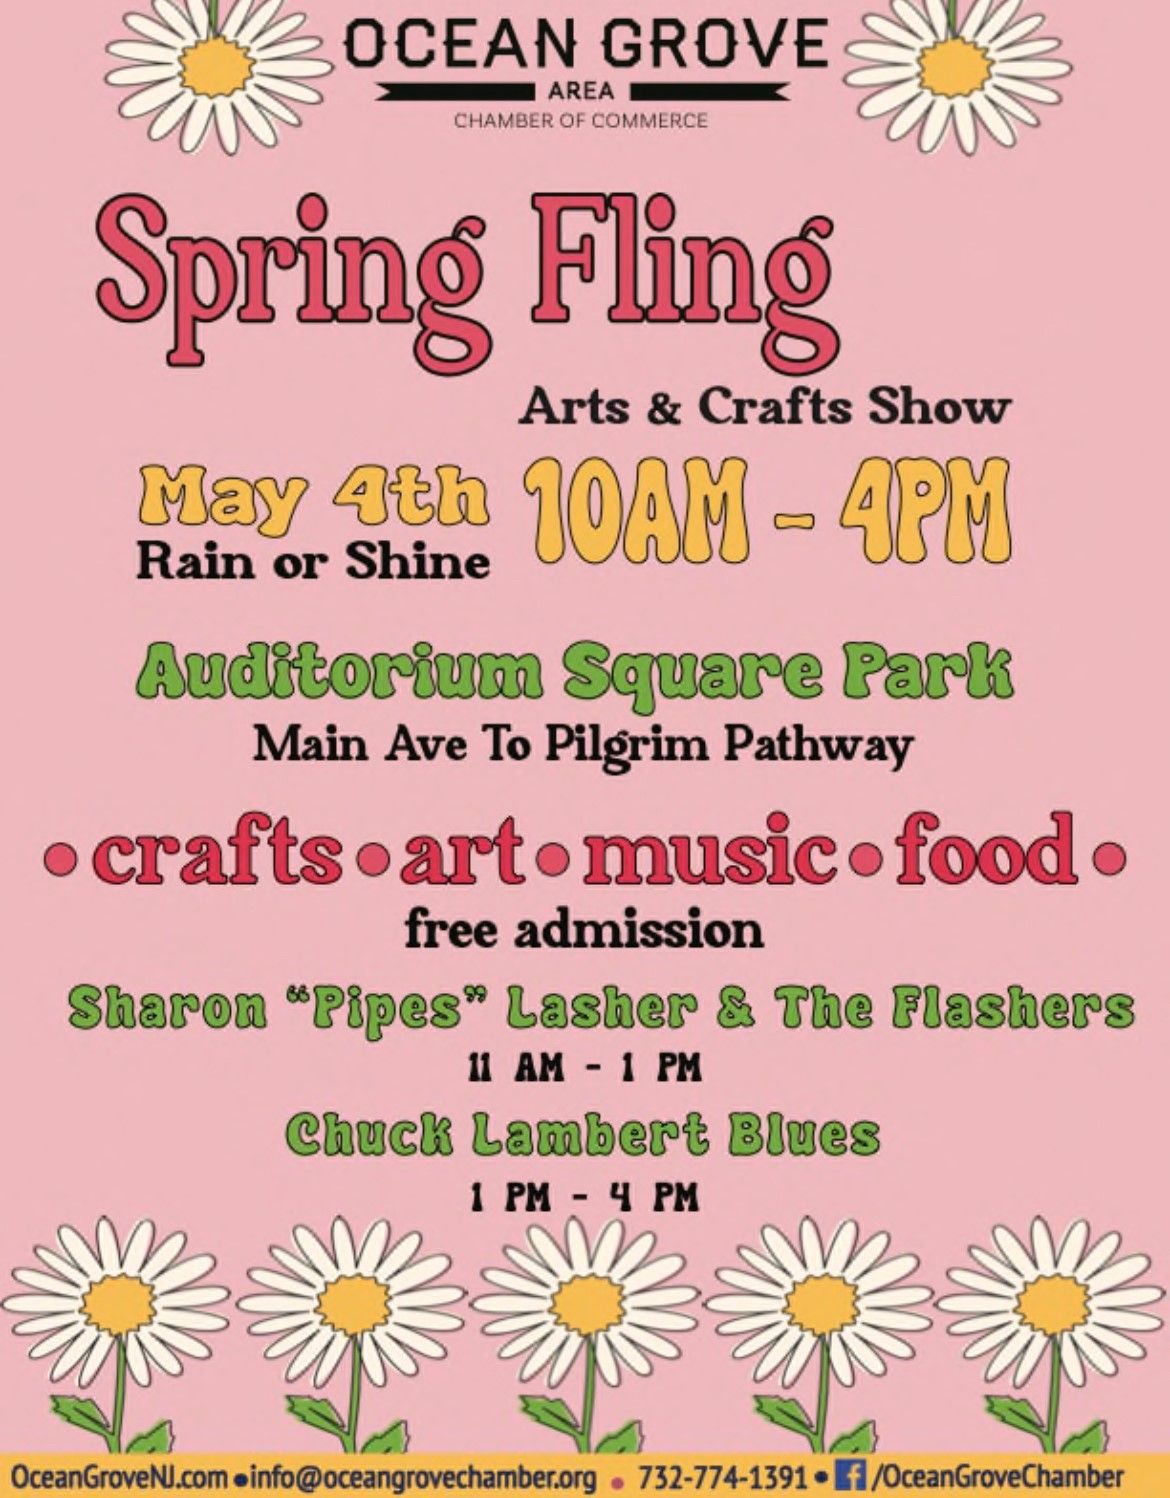 Ocean Grove's Spring Fling Arts & Crafts show